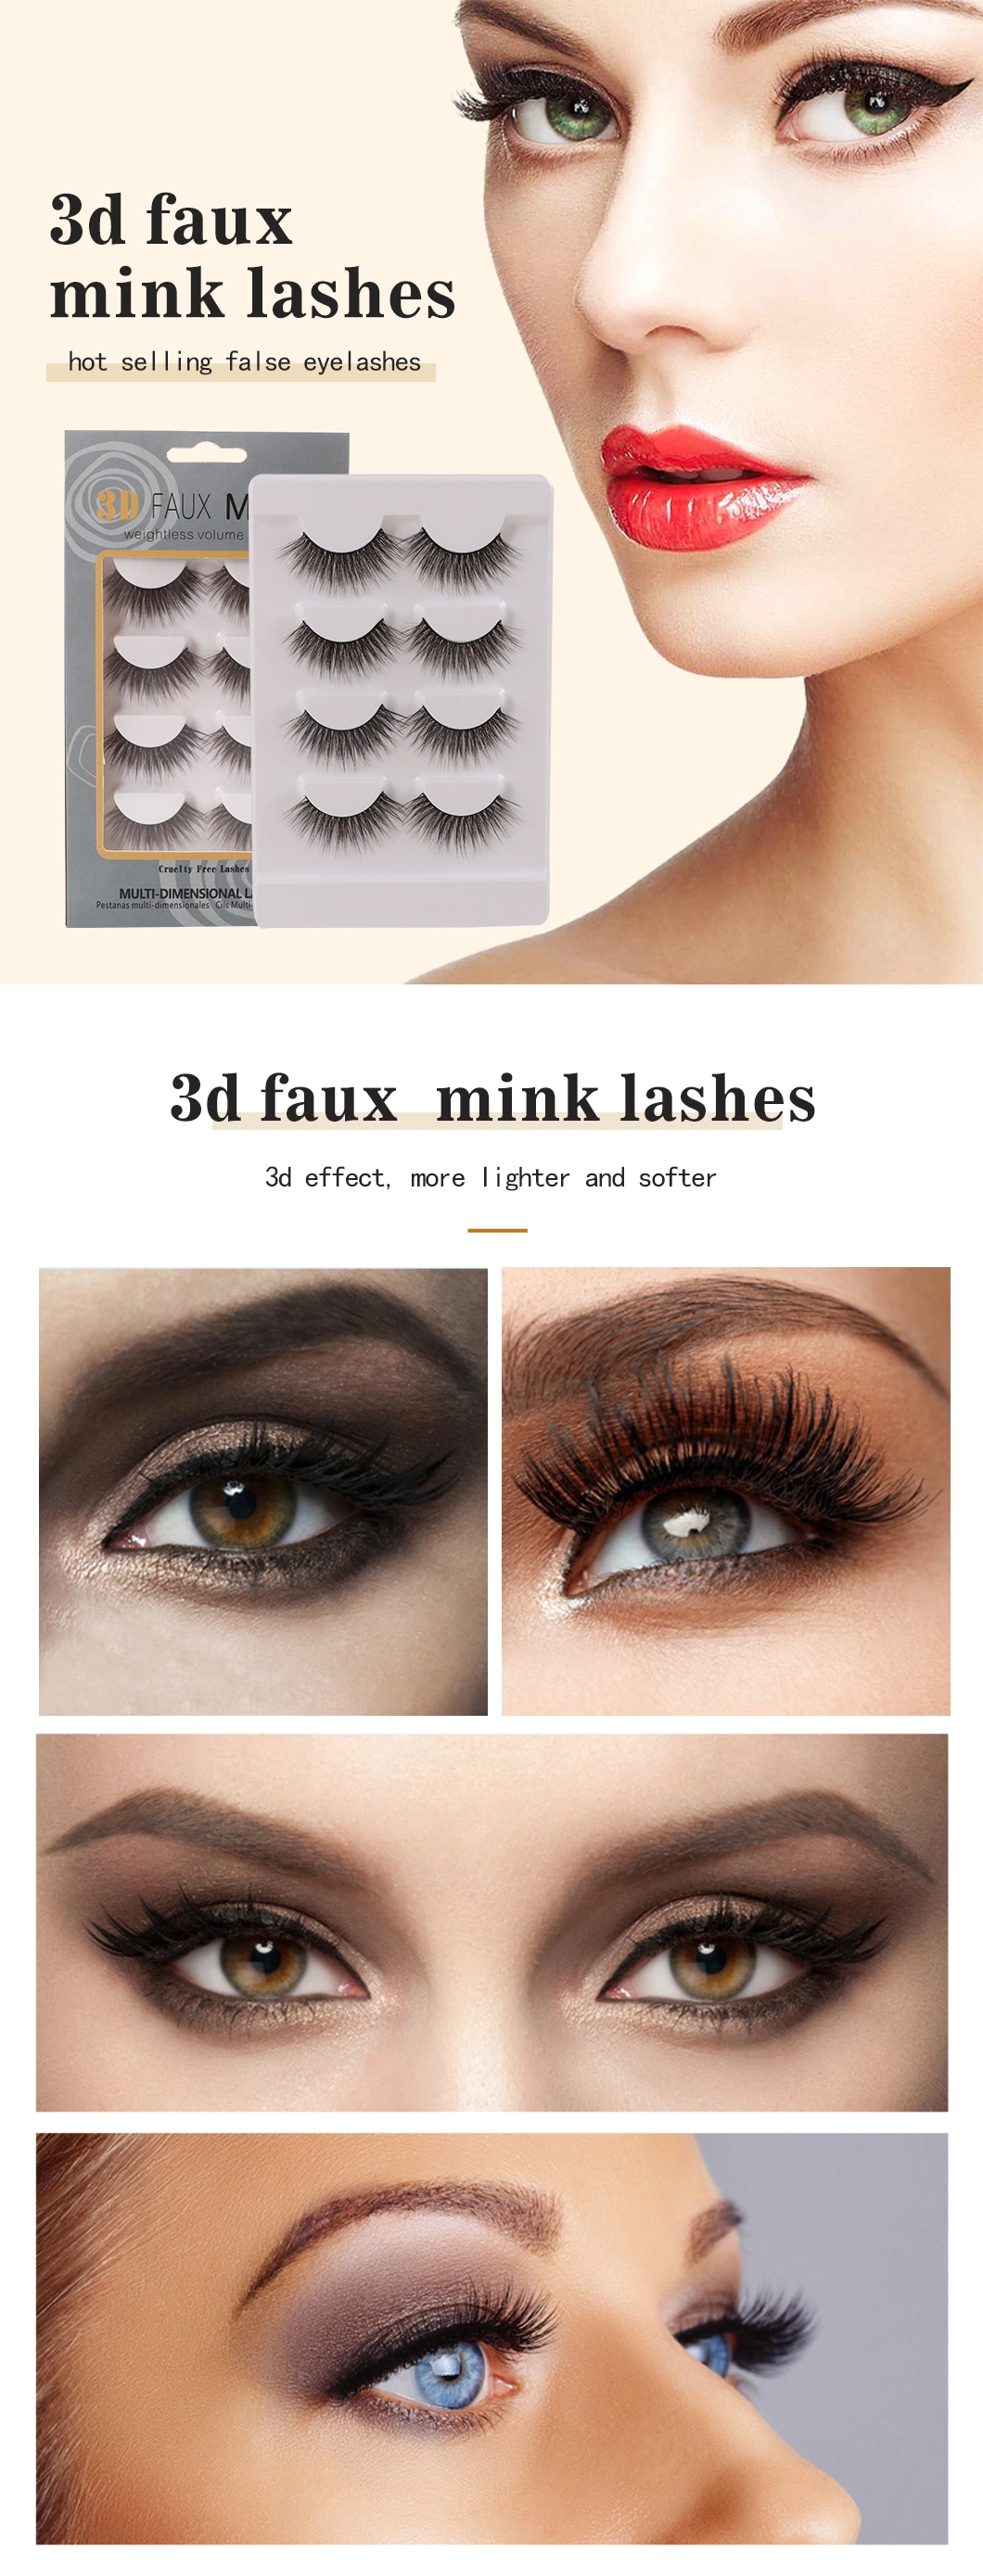 Wholesale Private Label Eyelash Vendor Natural Looking 3D Faux Mink Eyelashes 3D Silk Fluufy Lashes